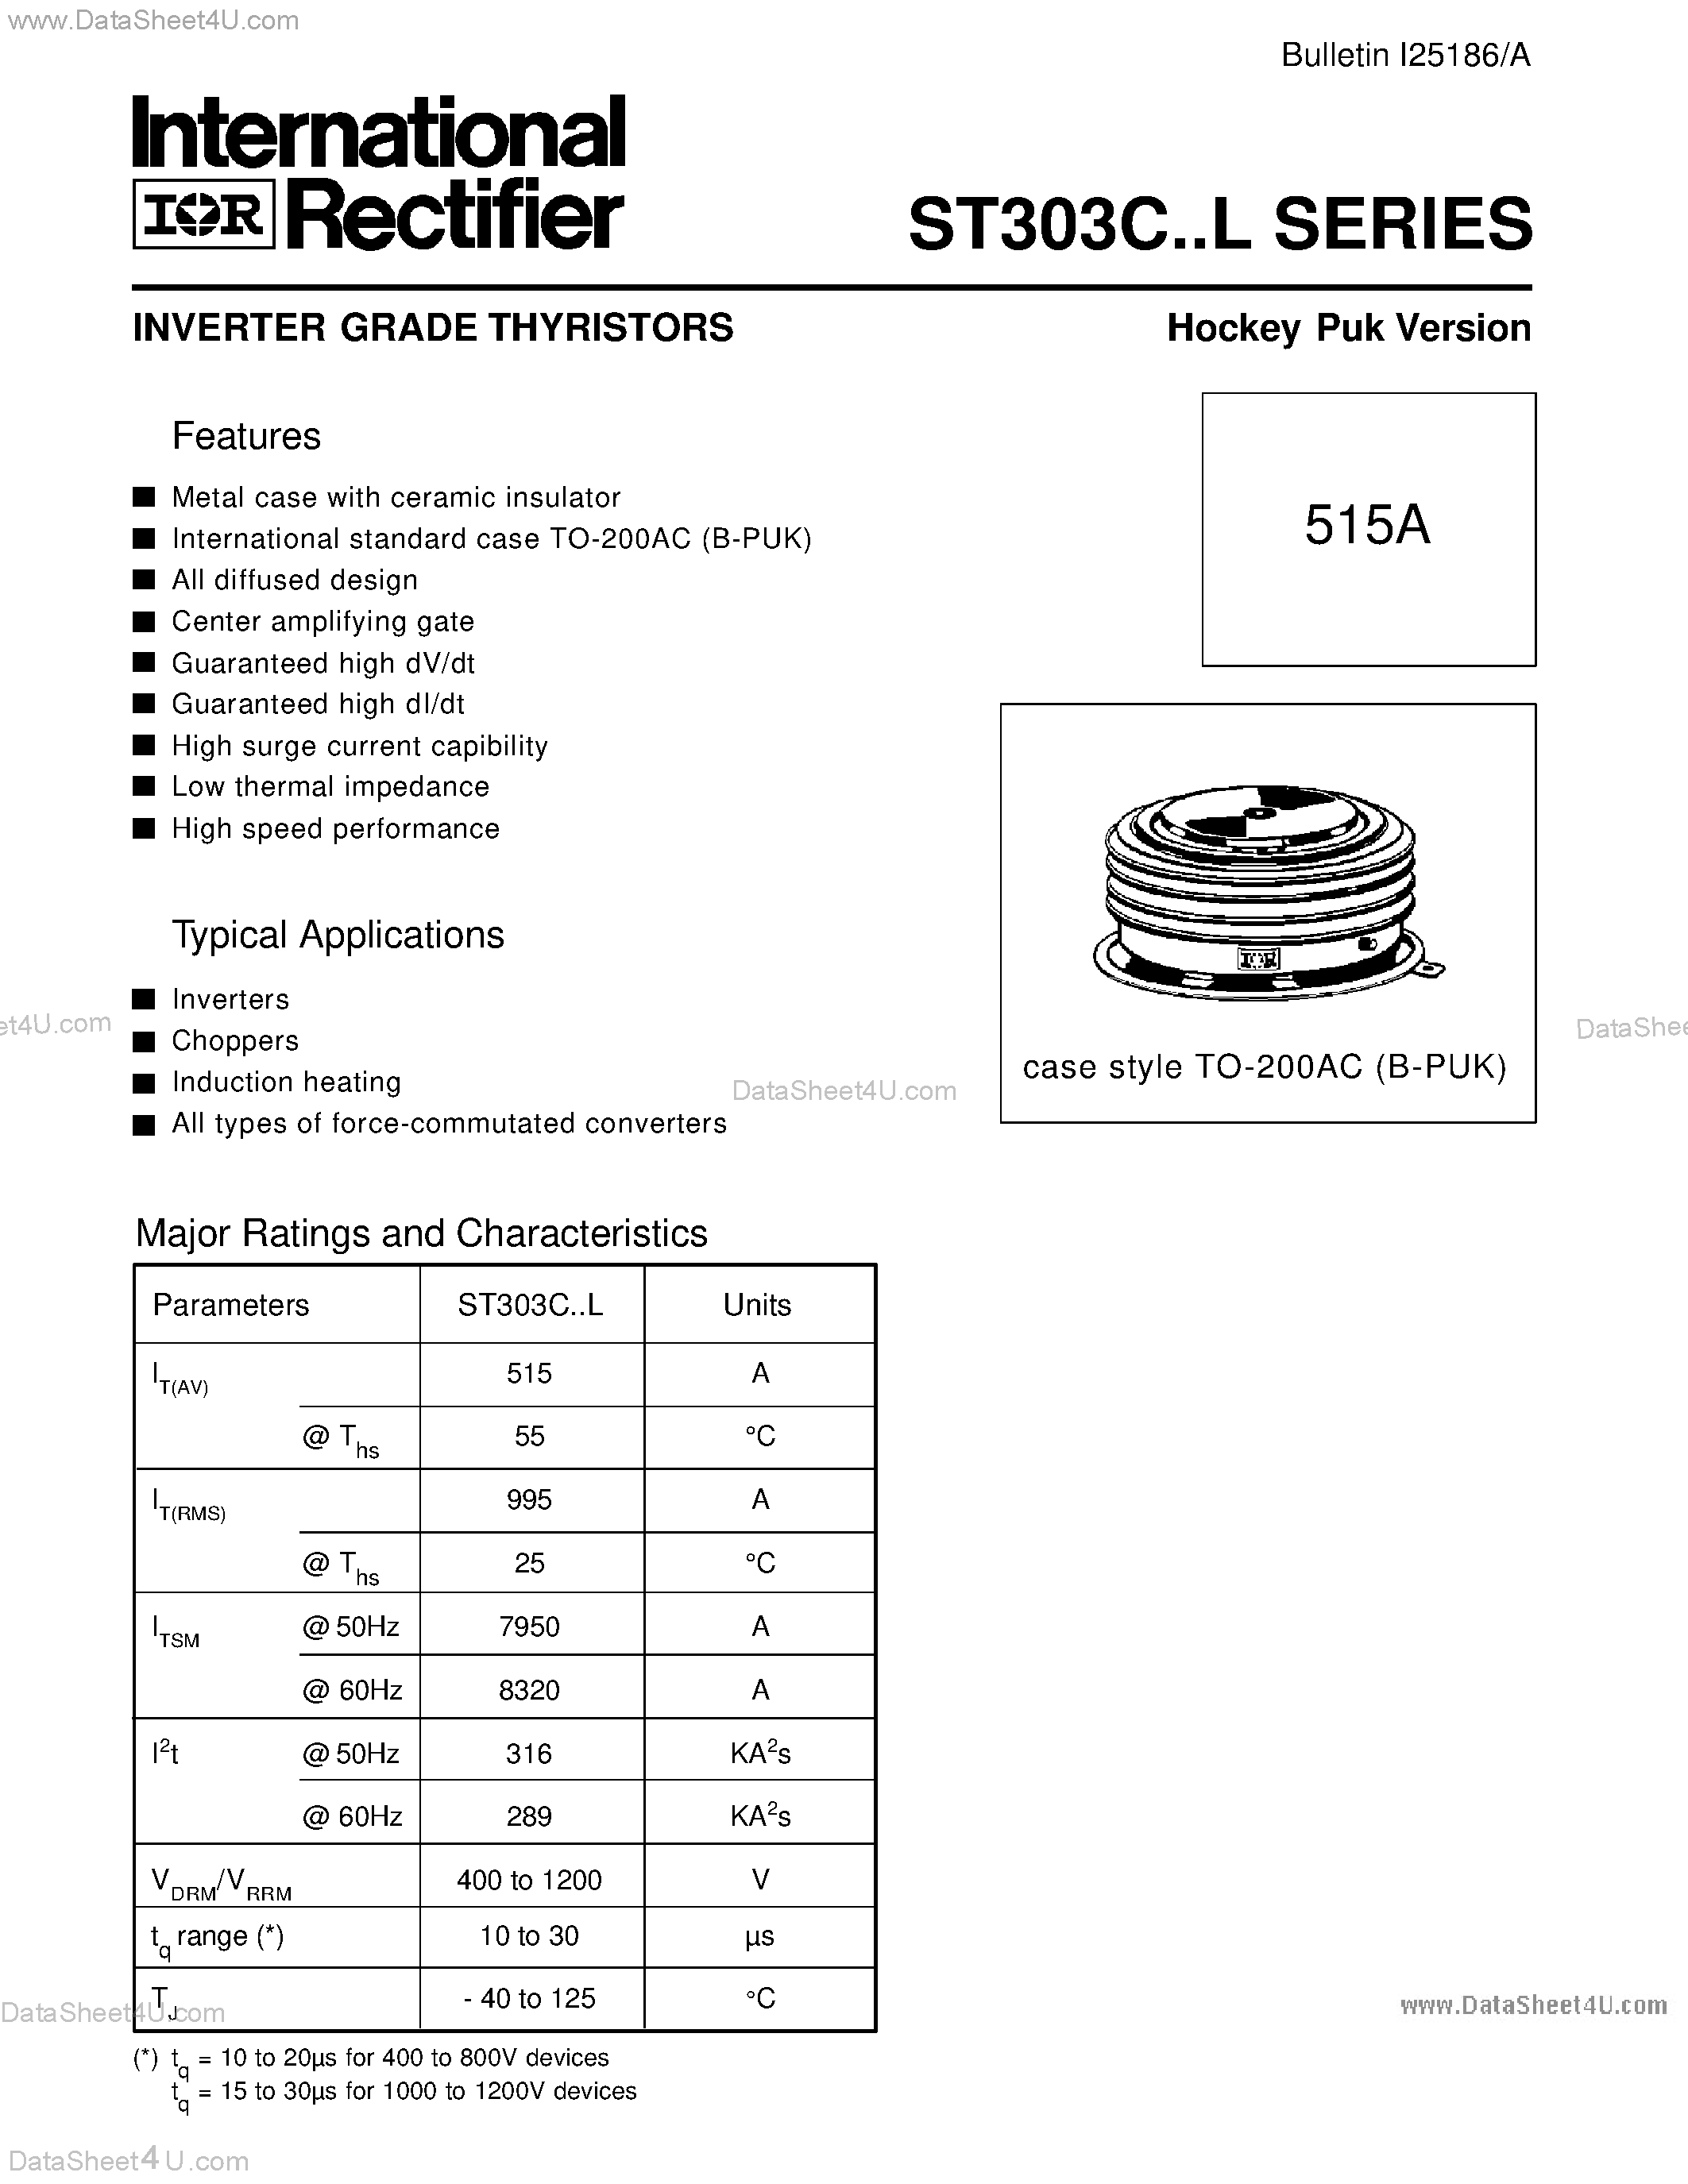 Даташит ST303C - INVERTER GRADE THYRISTORS Hockey Puk Version страница 2